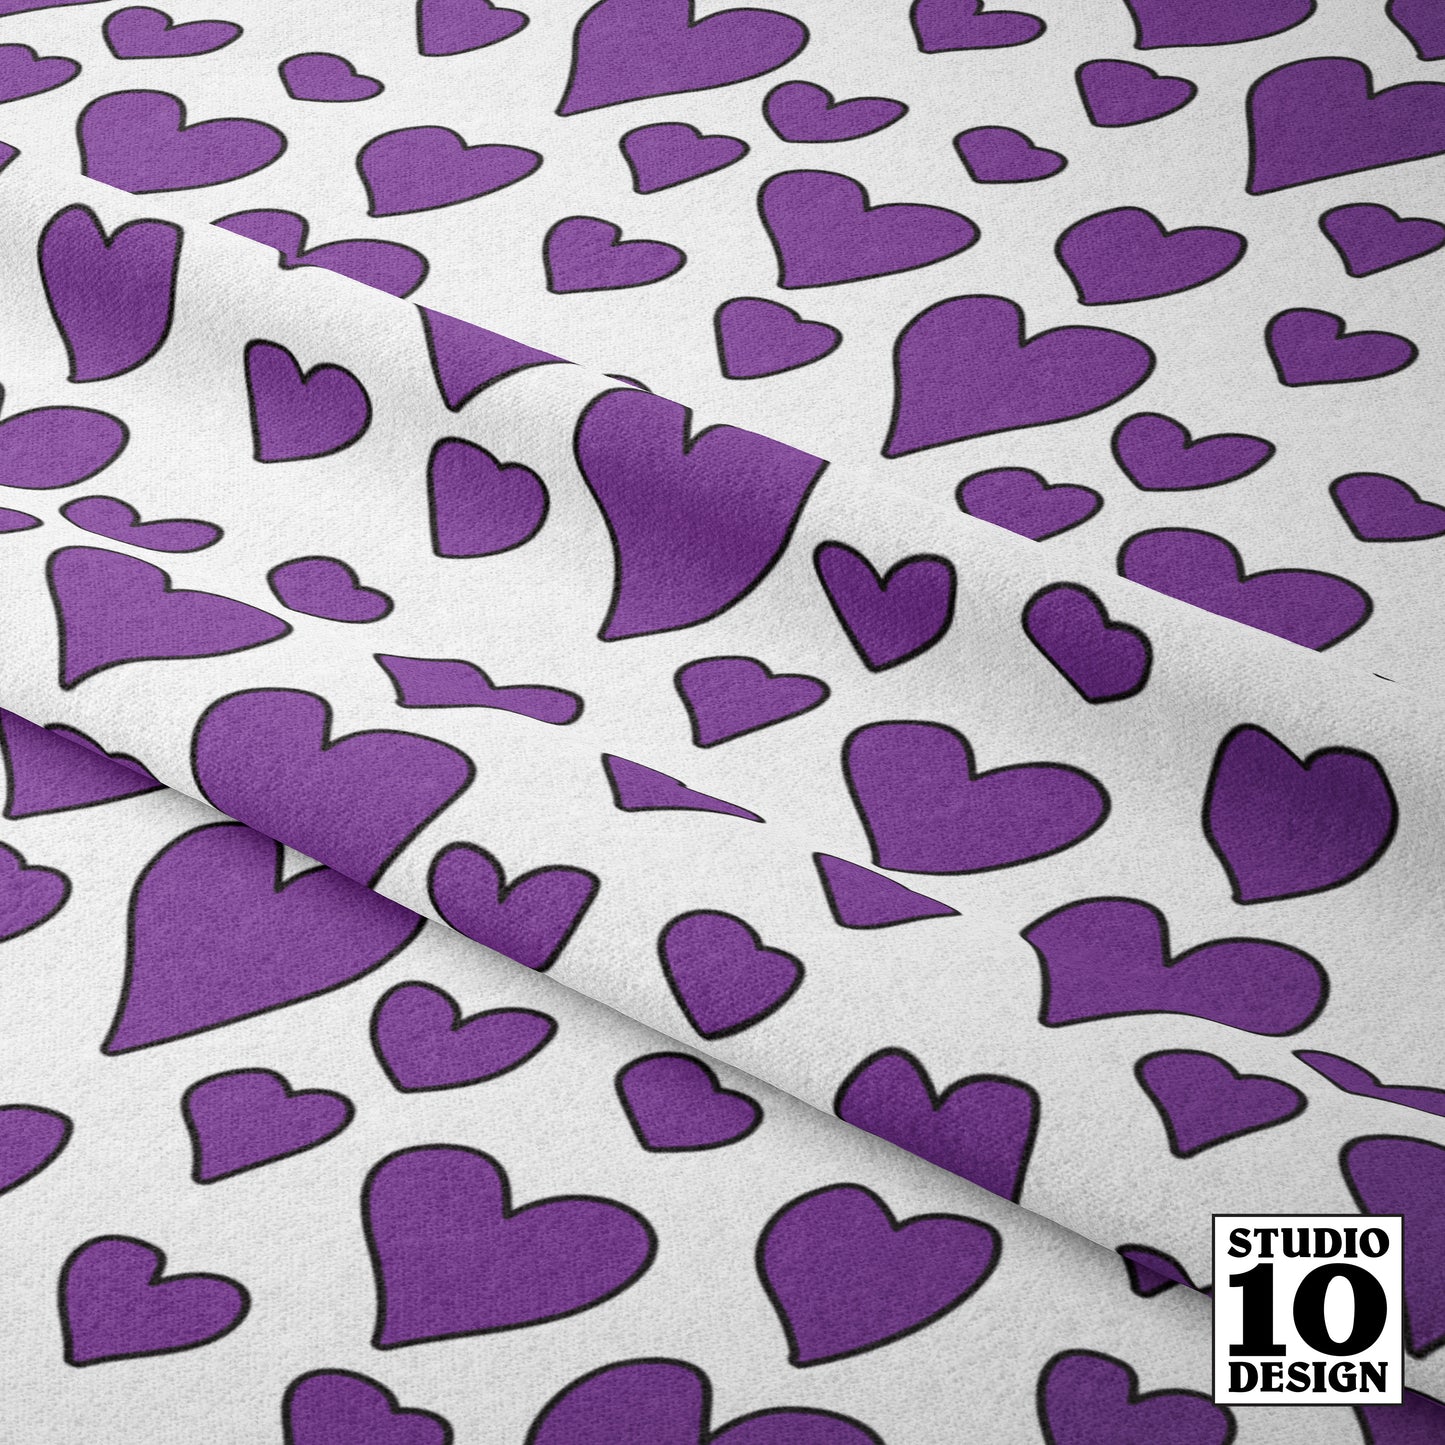 Rainbow Hearts Violet+White Printed Fabric by Studio Ten Design